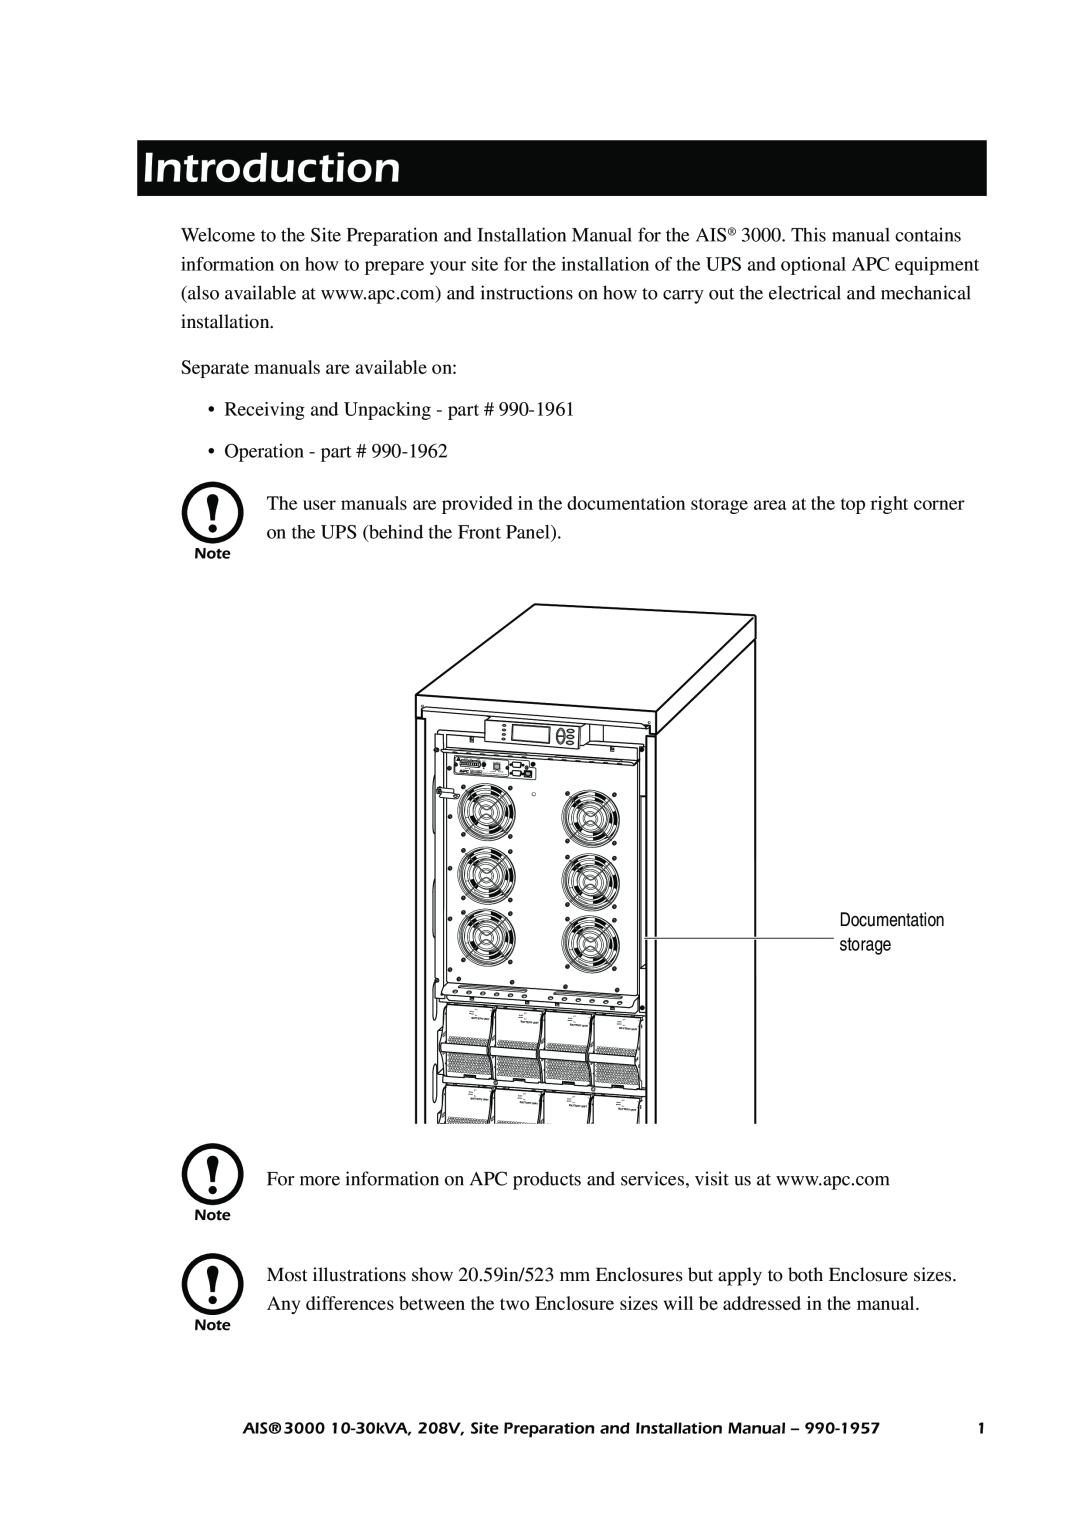 APC 3000 installation manual Introduction 